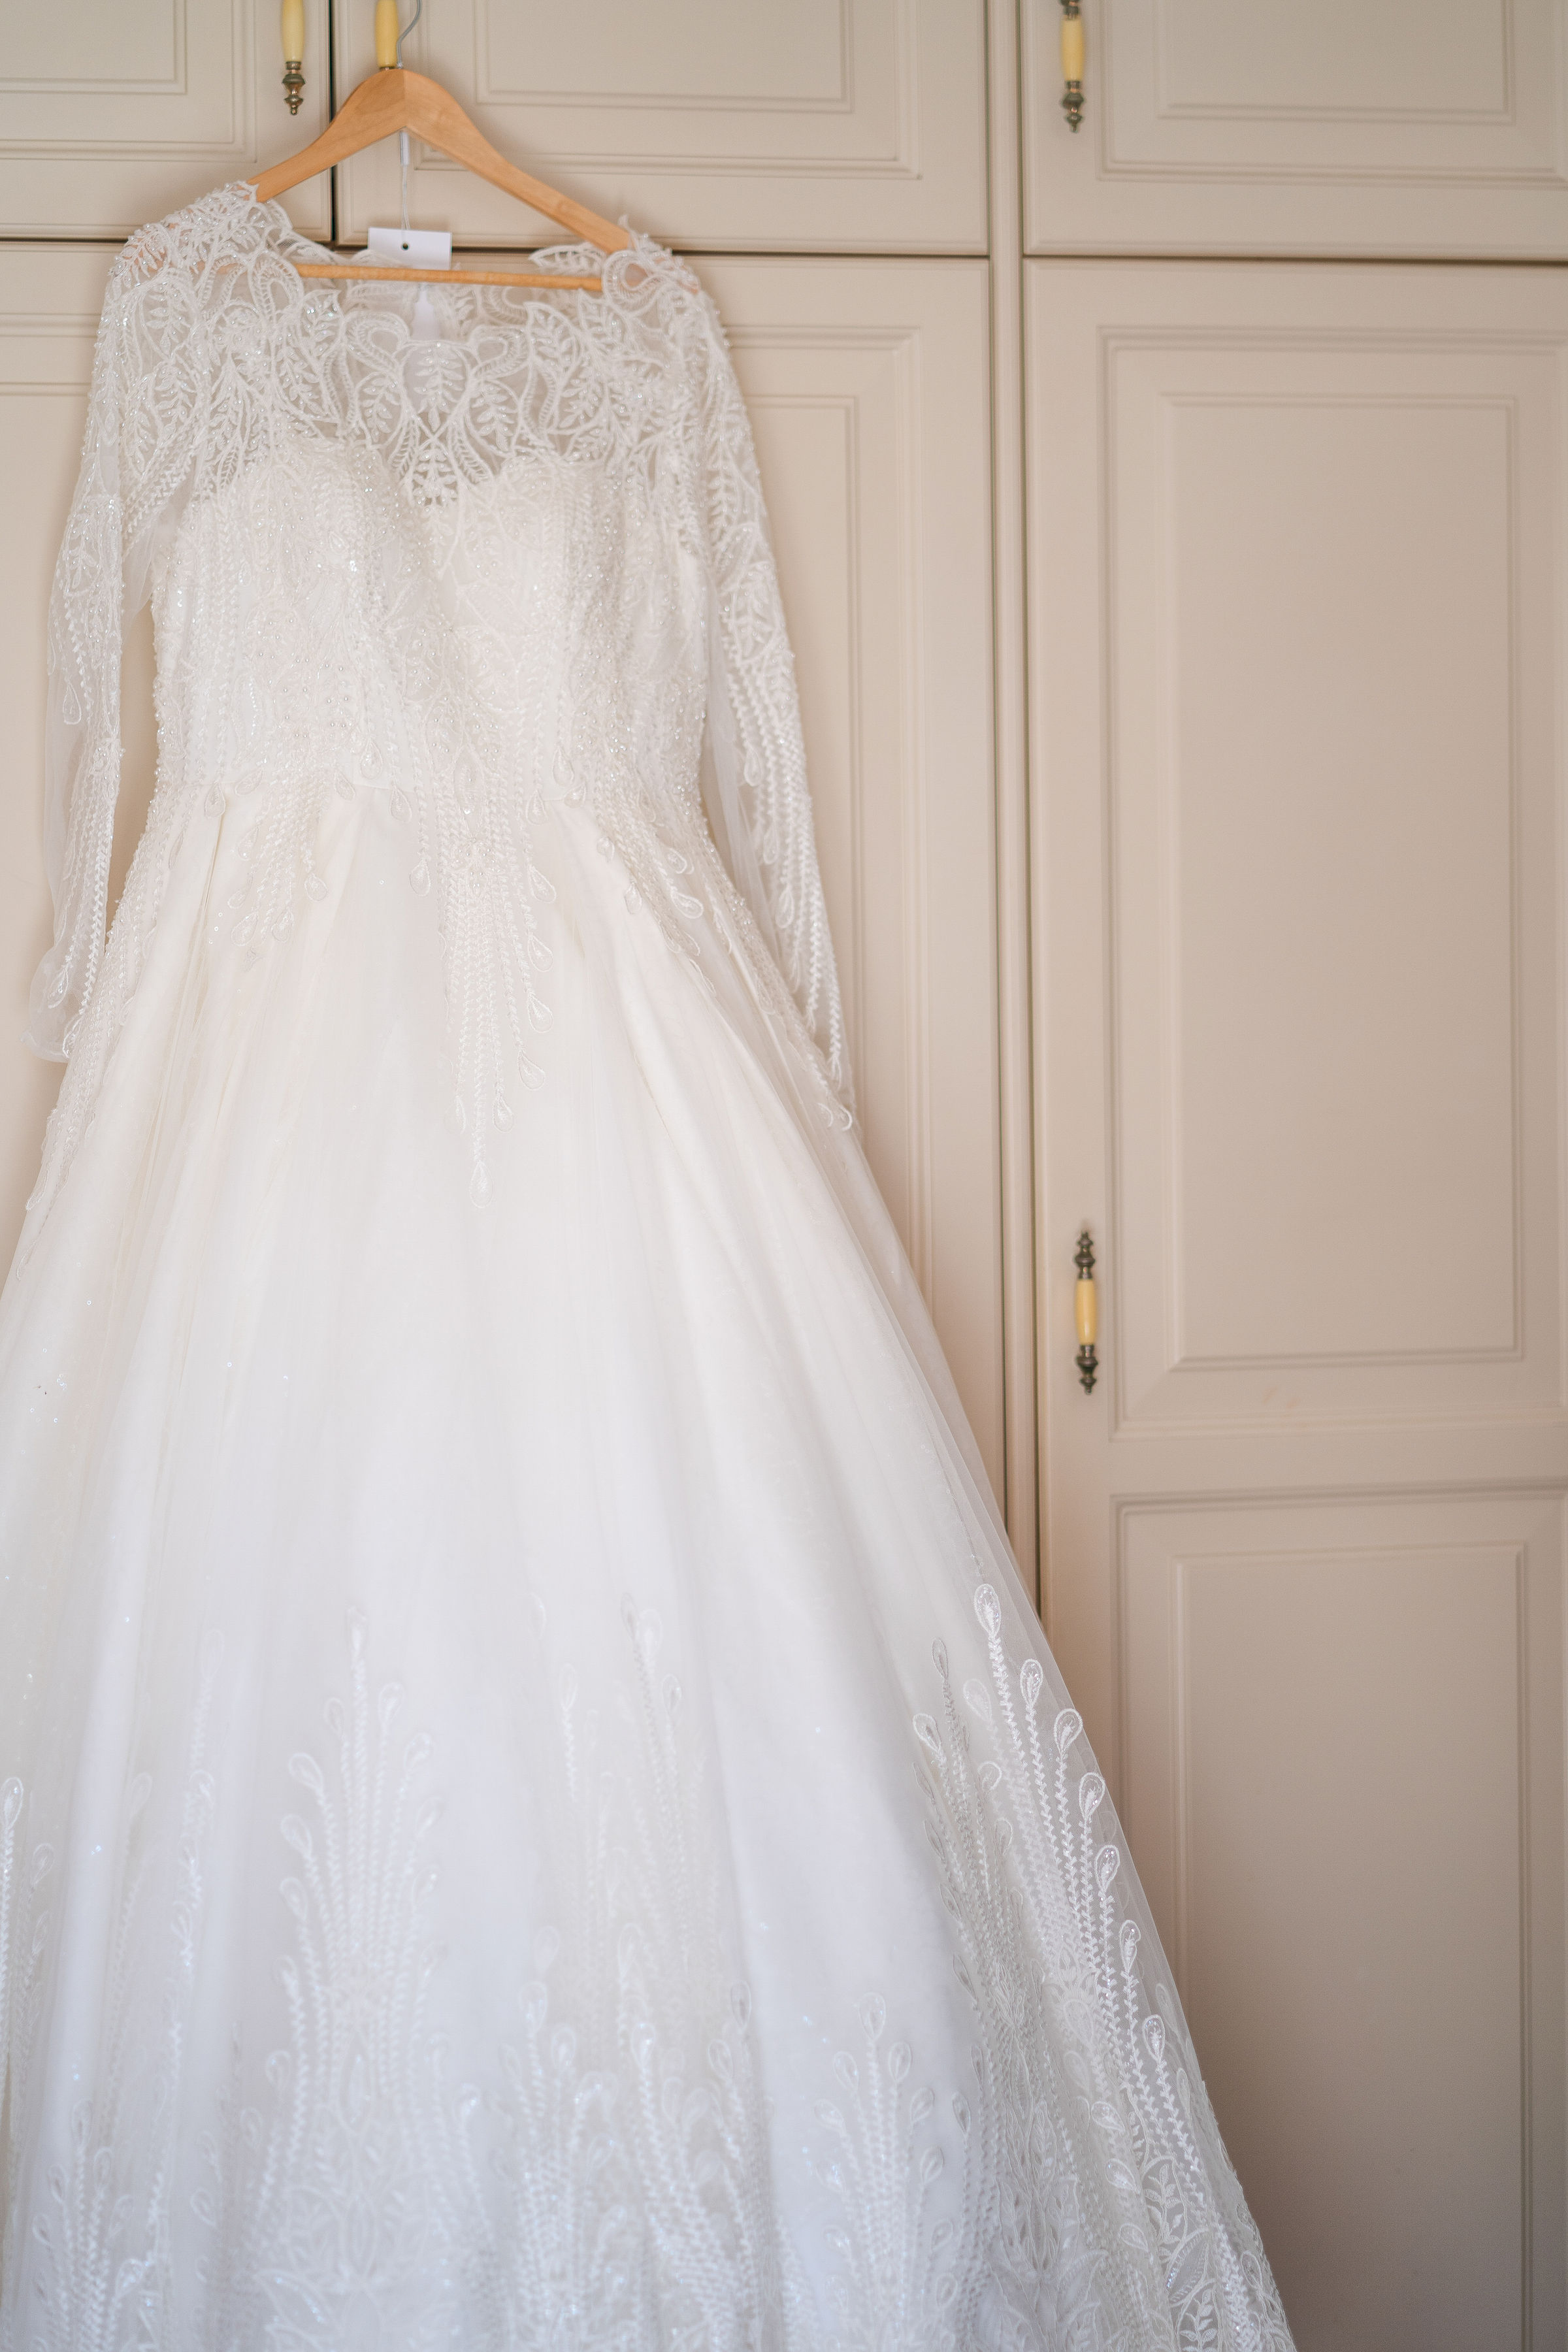 Stunning White Glitter Ball Gown Dress including Veil for Sale Designed